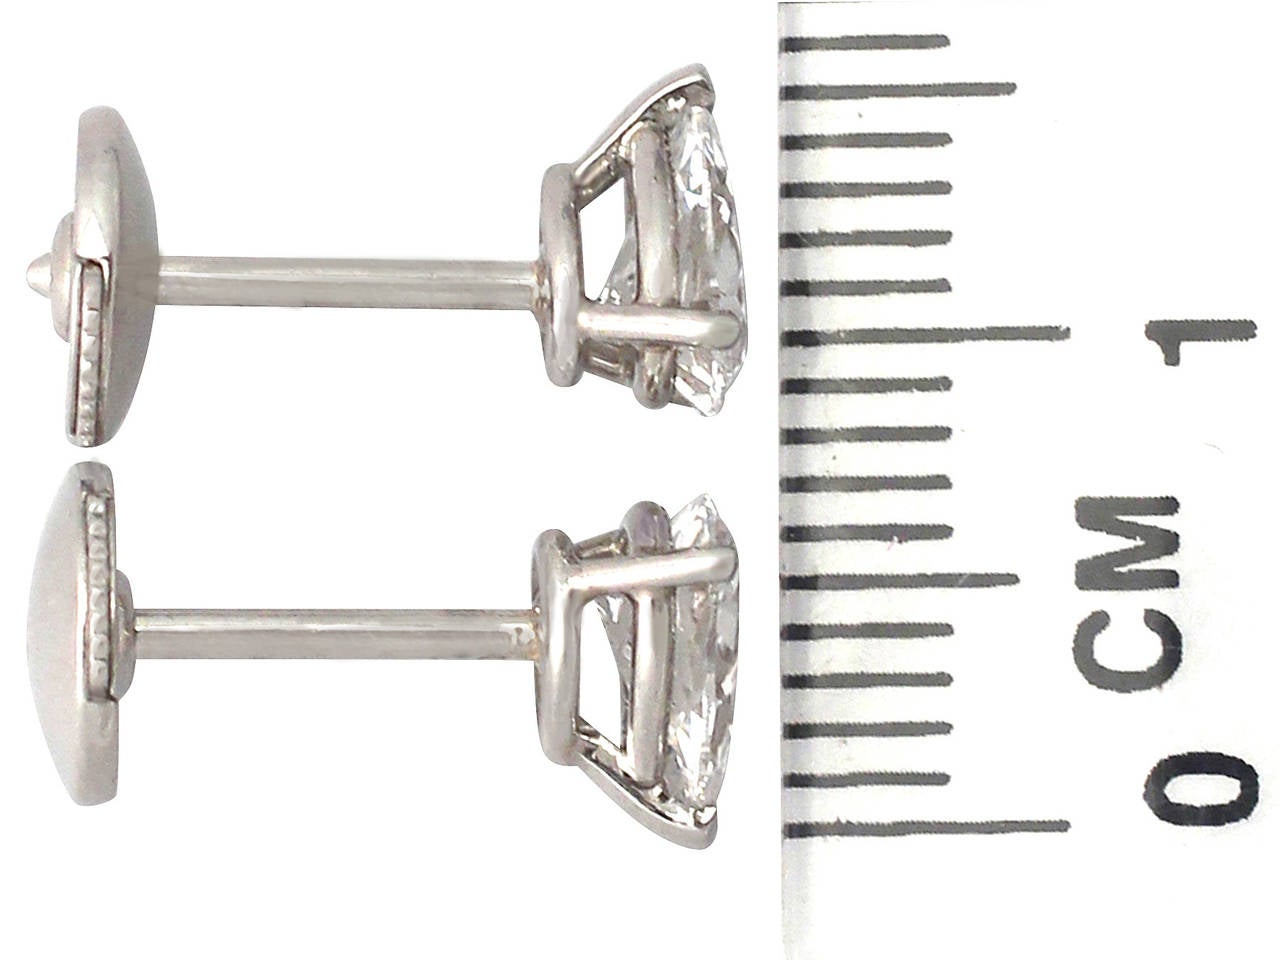 1.15Ct Pear Cut Diamond and Platinum Stud Earrings - Contemporary Circa 2000 1